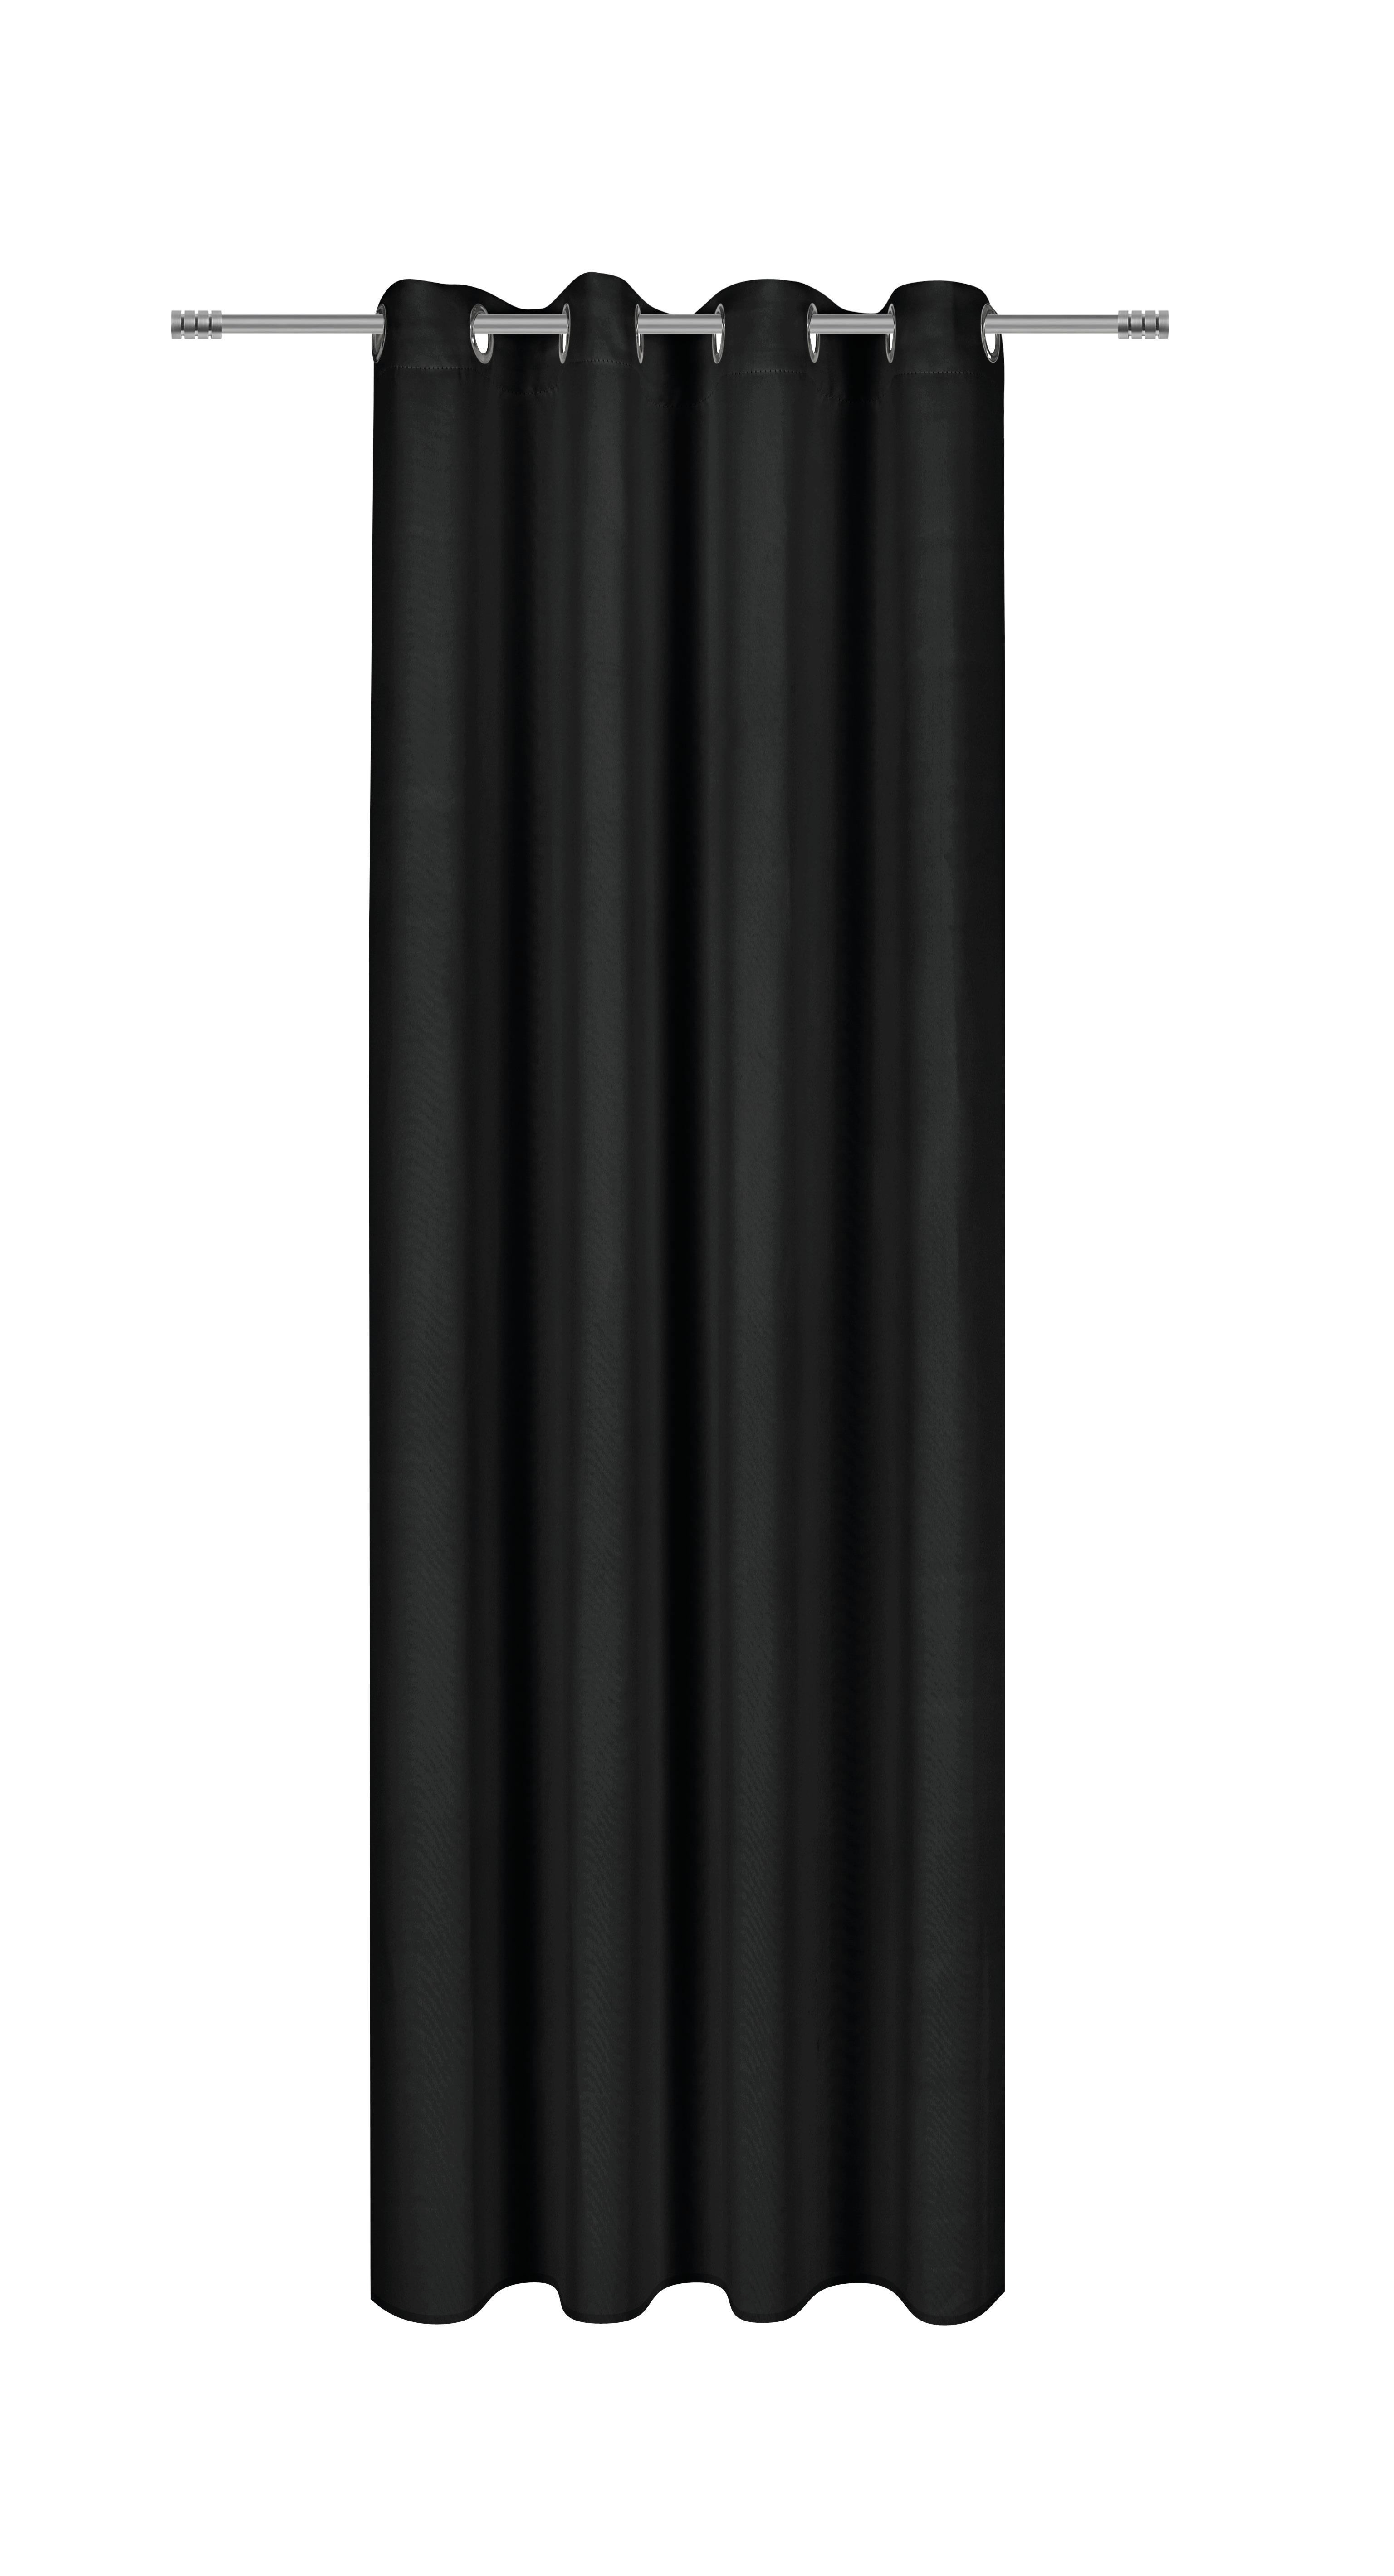 ÖLJETTLÄNGD black-out (mörkläggande)  - svart, Basics, textil (140/245cm) - Esposa